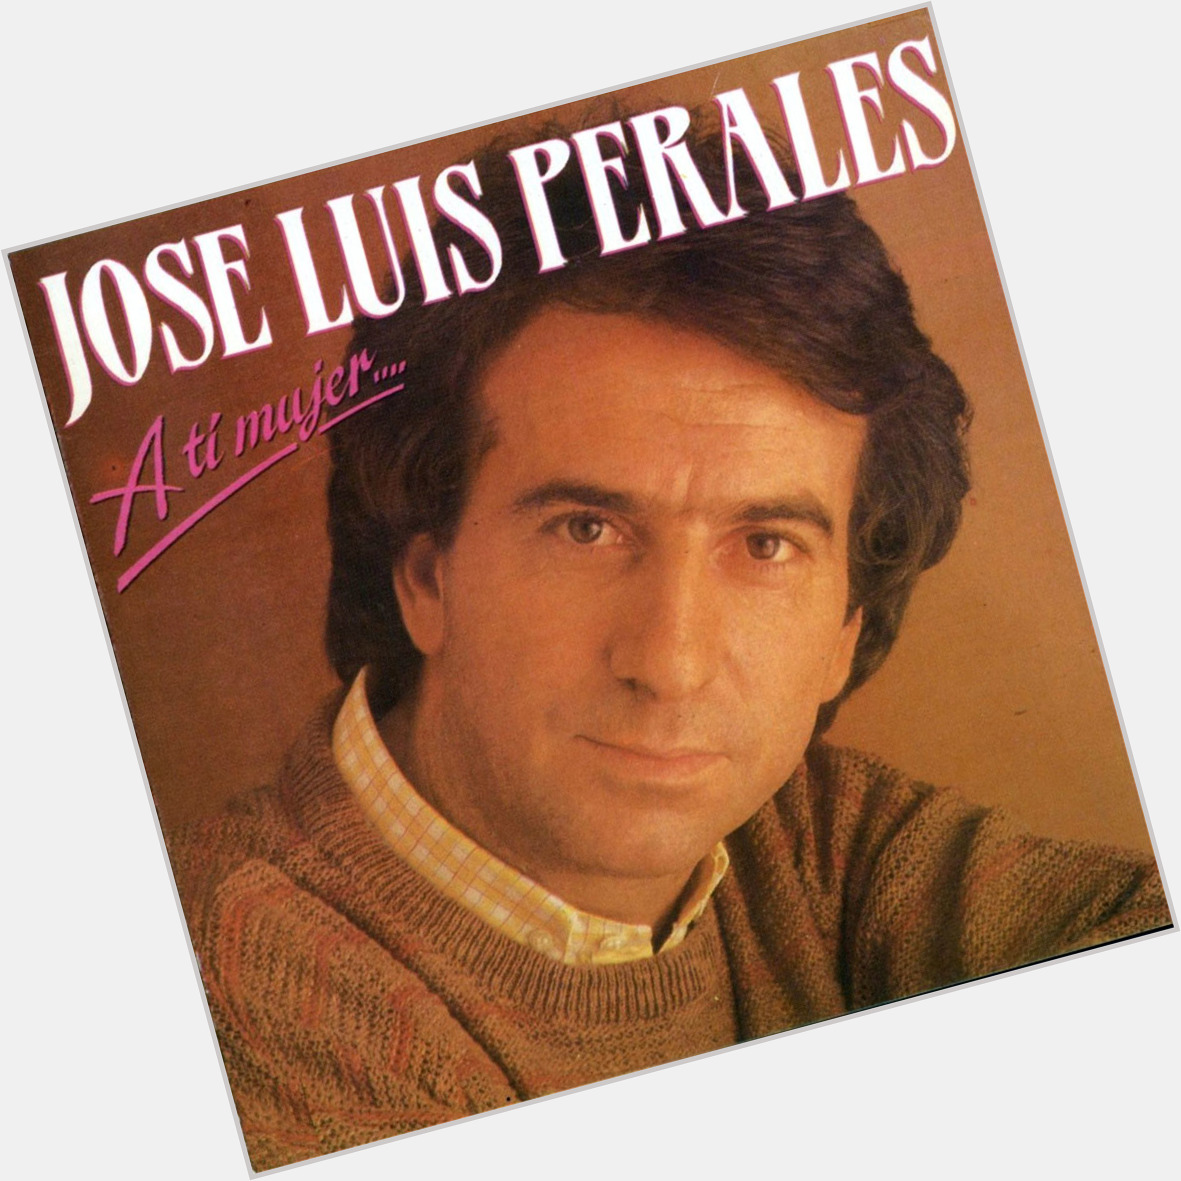 Jose Luis Perales where who 3